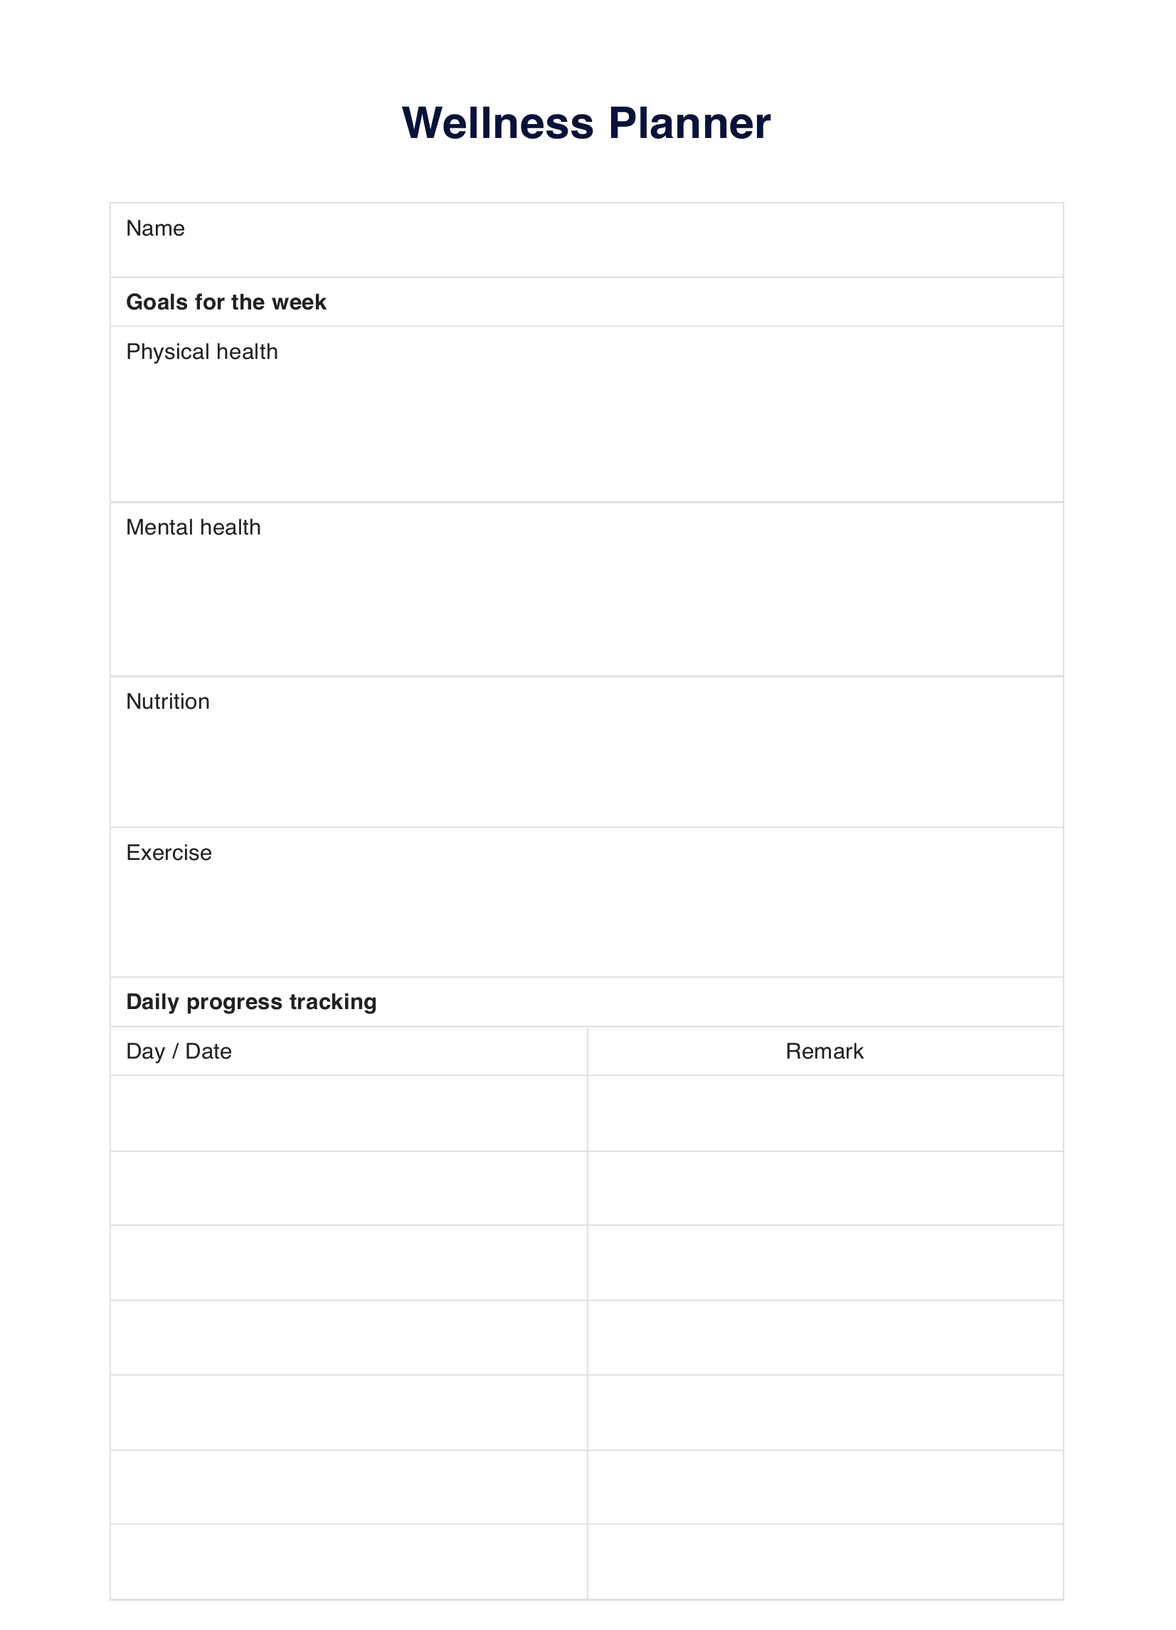 Wellness Planner PDF Example